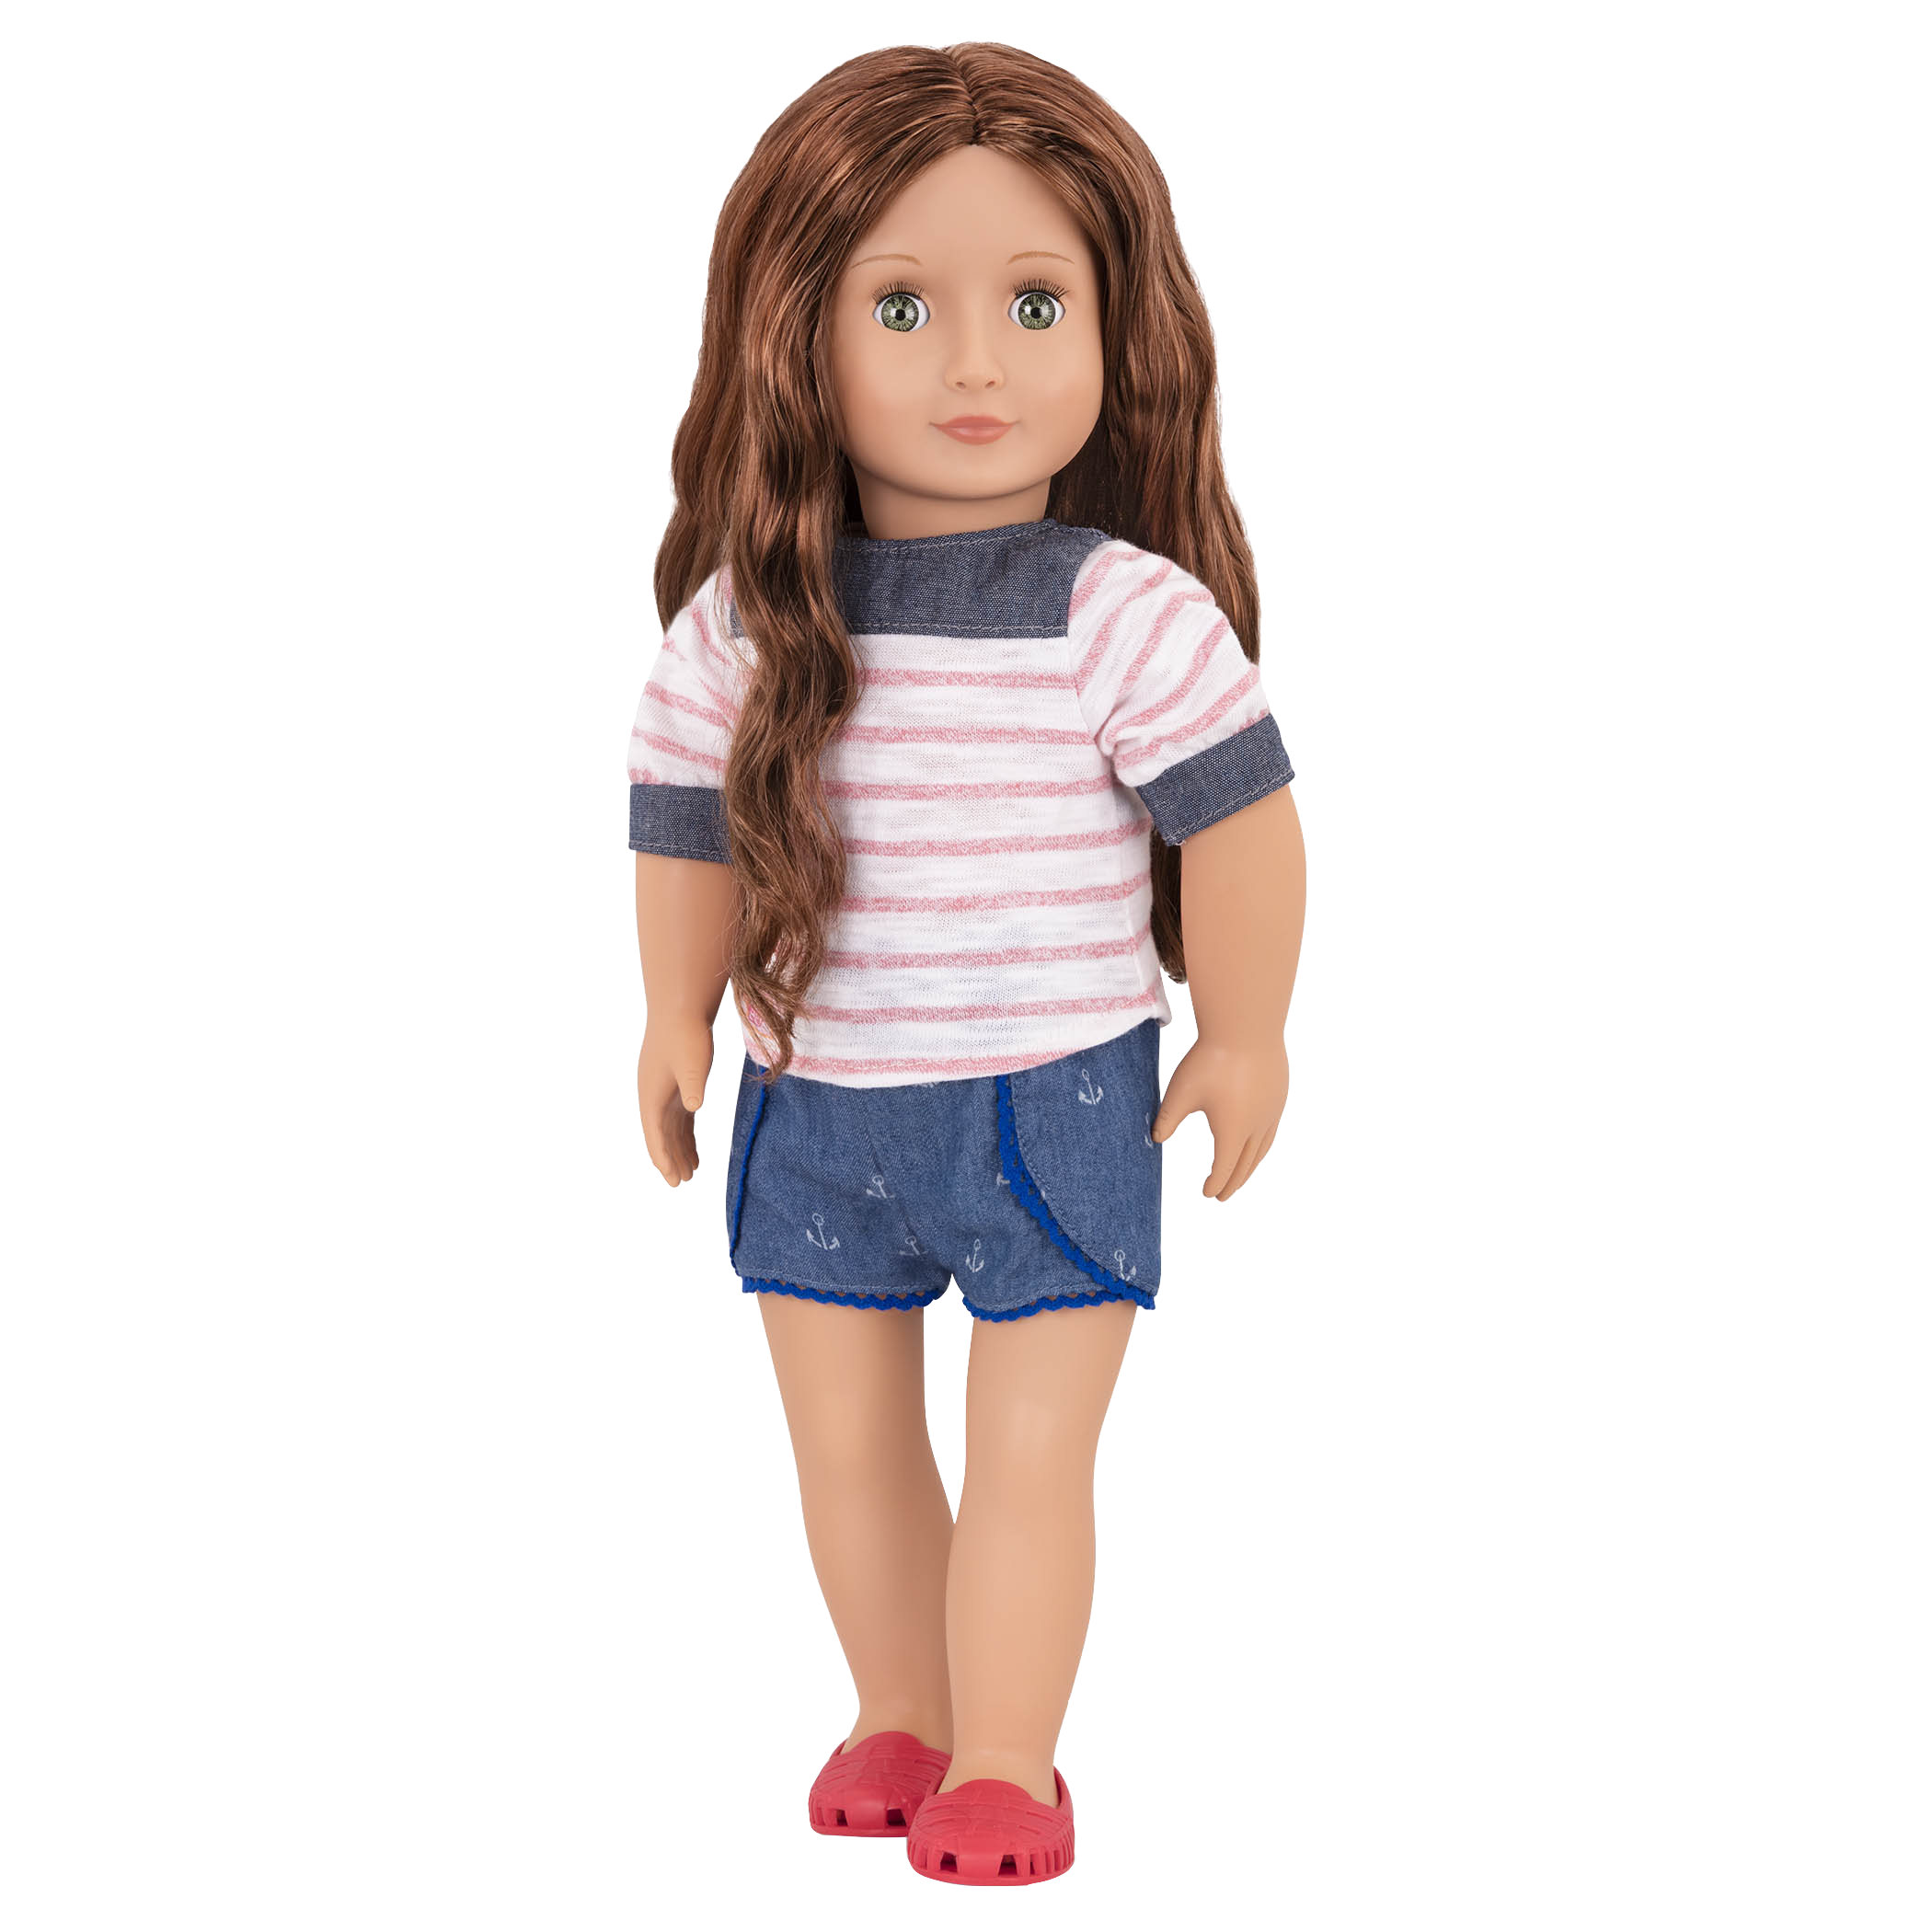 Shailene 18-inch Doll in Beach Outfit